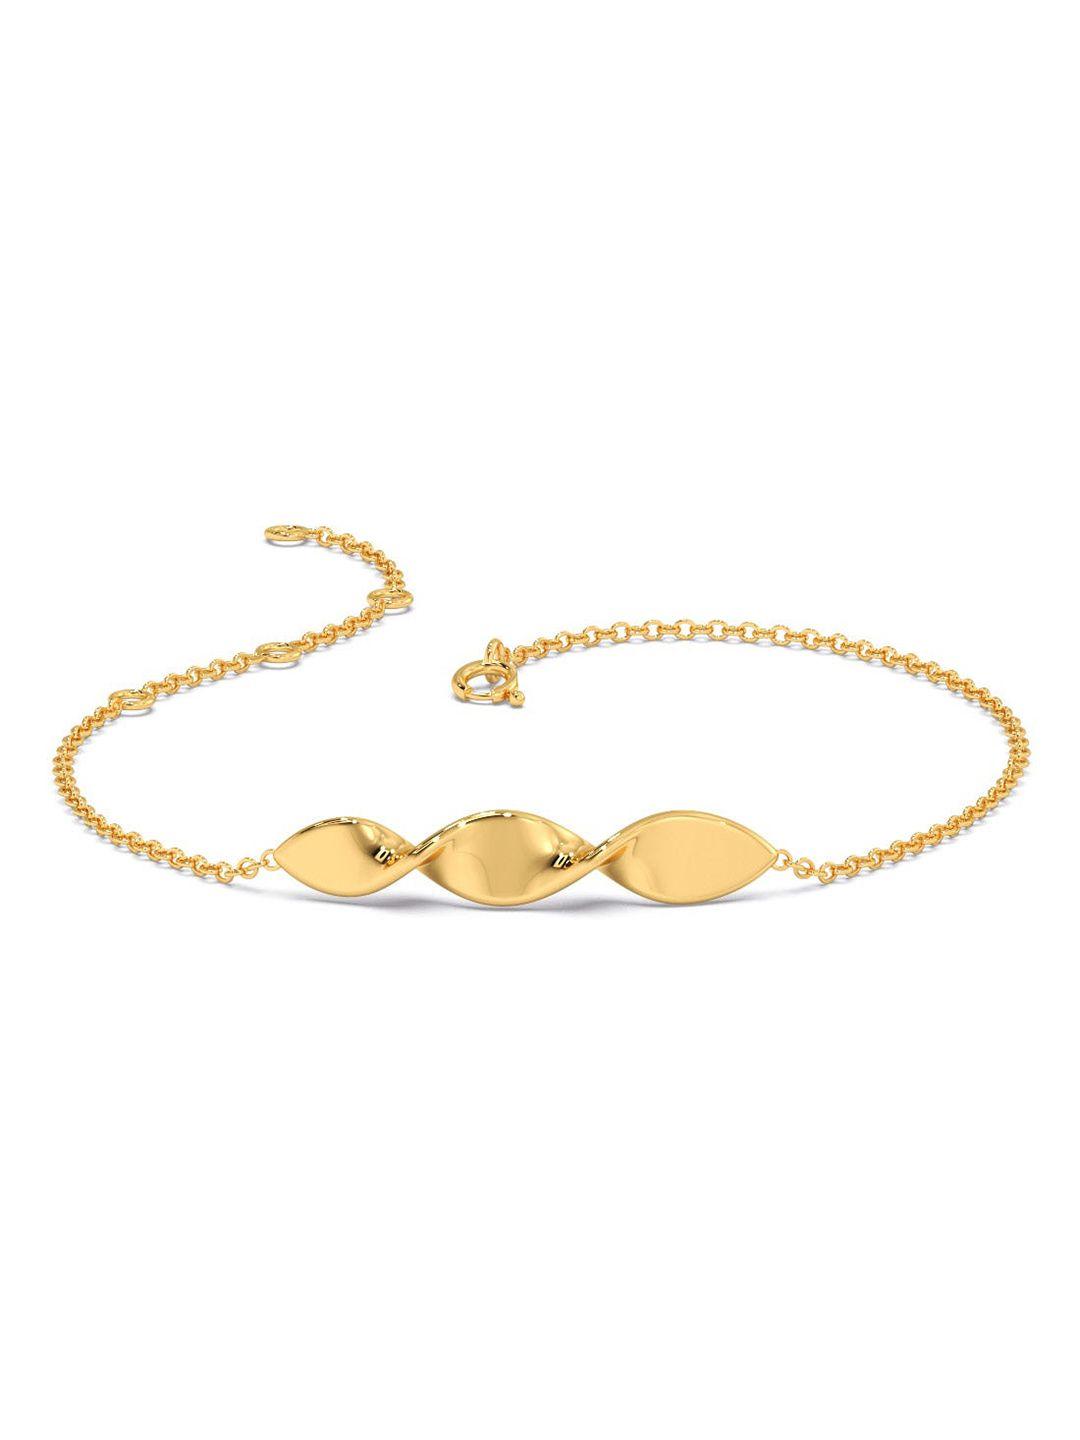 candere a kalyan jewellers company 18kt bis hallmark gold bracelet-1.97gm